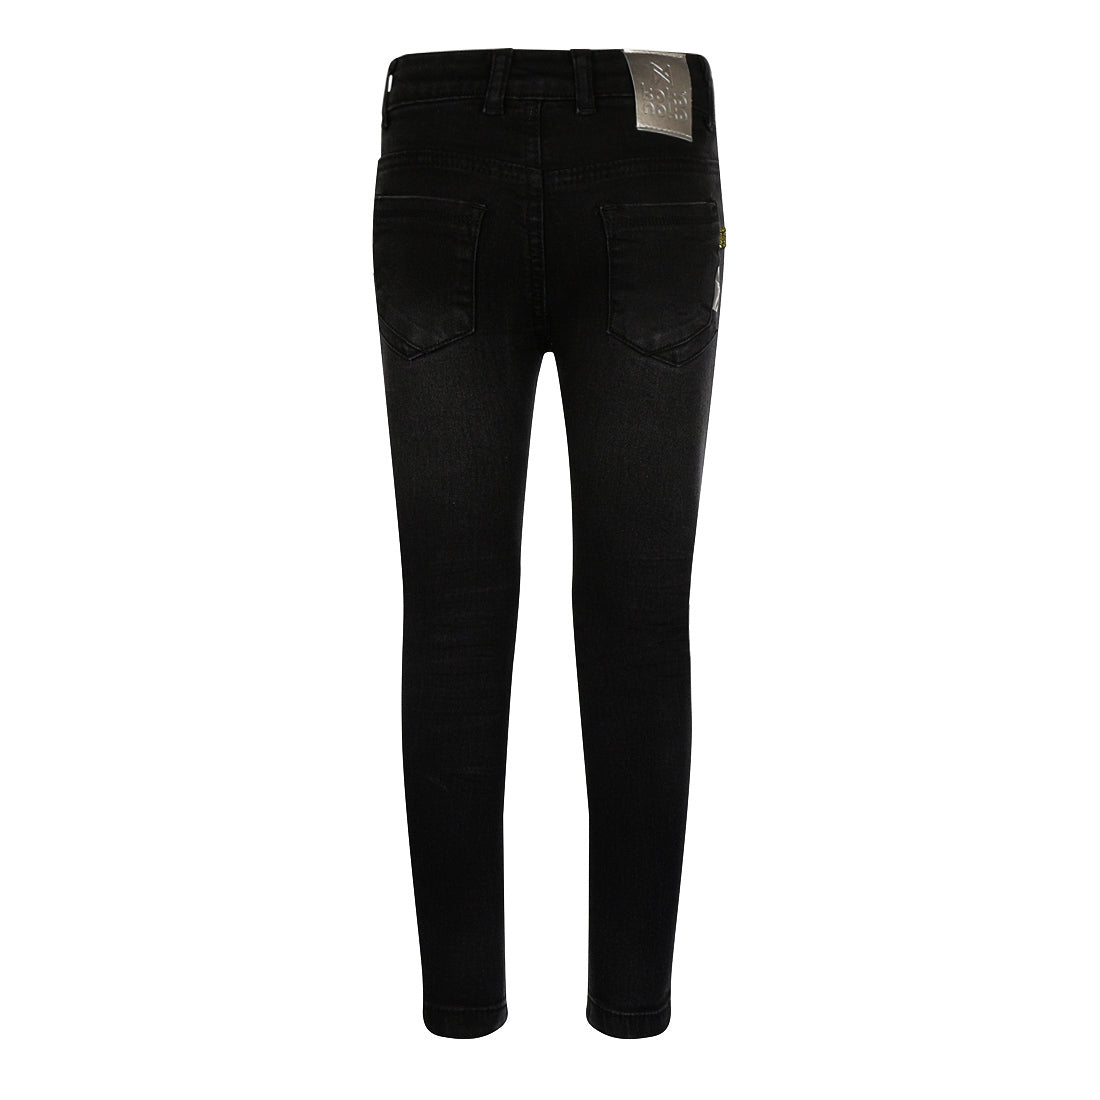 Meisjes Jeans Skinny van Koko Noko in de kleur Black jeans in maat 128.